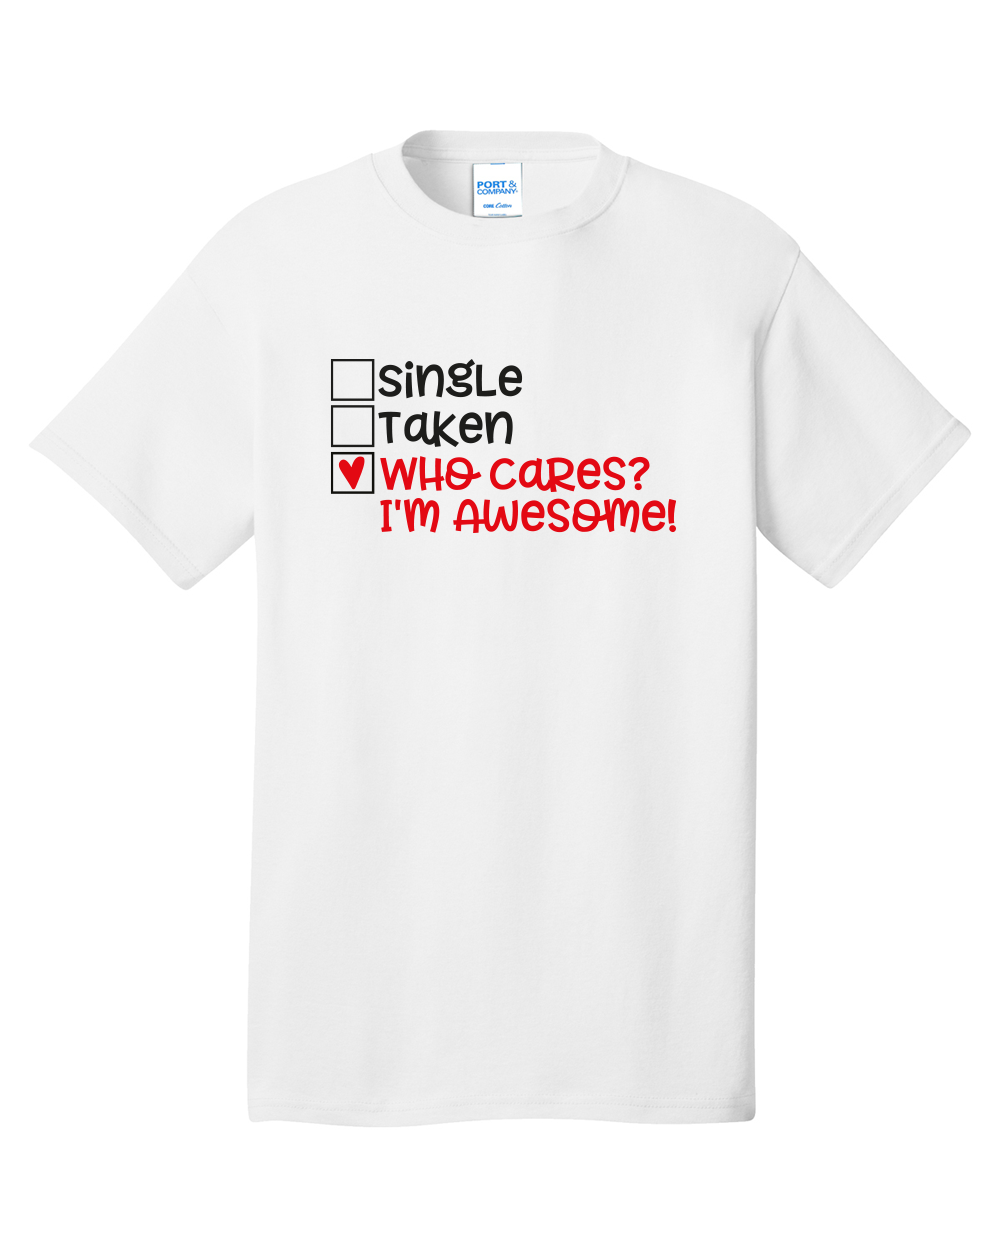 Single, Taken, Who Cares - Port & Company Core Cotton T-Shirt